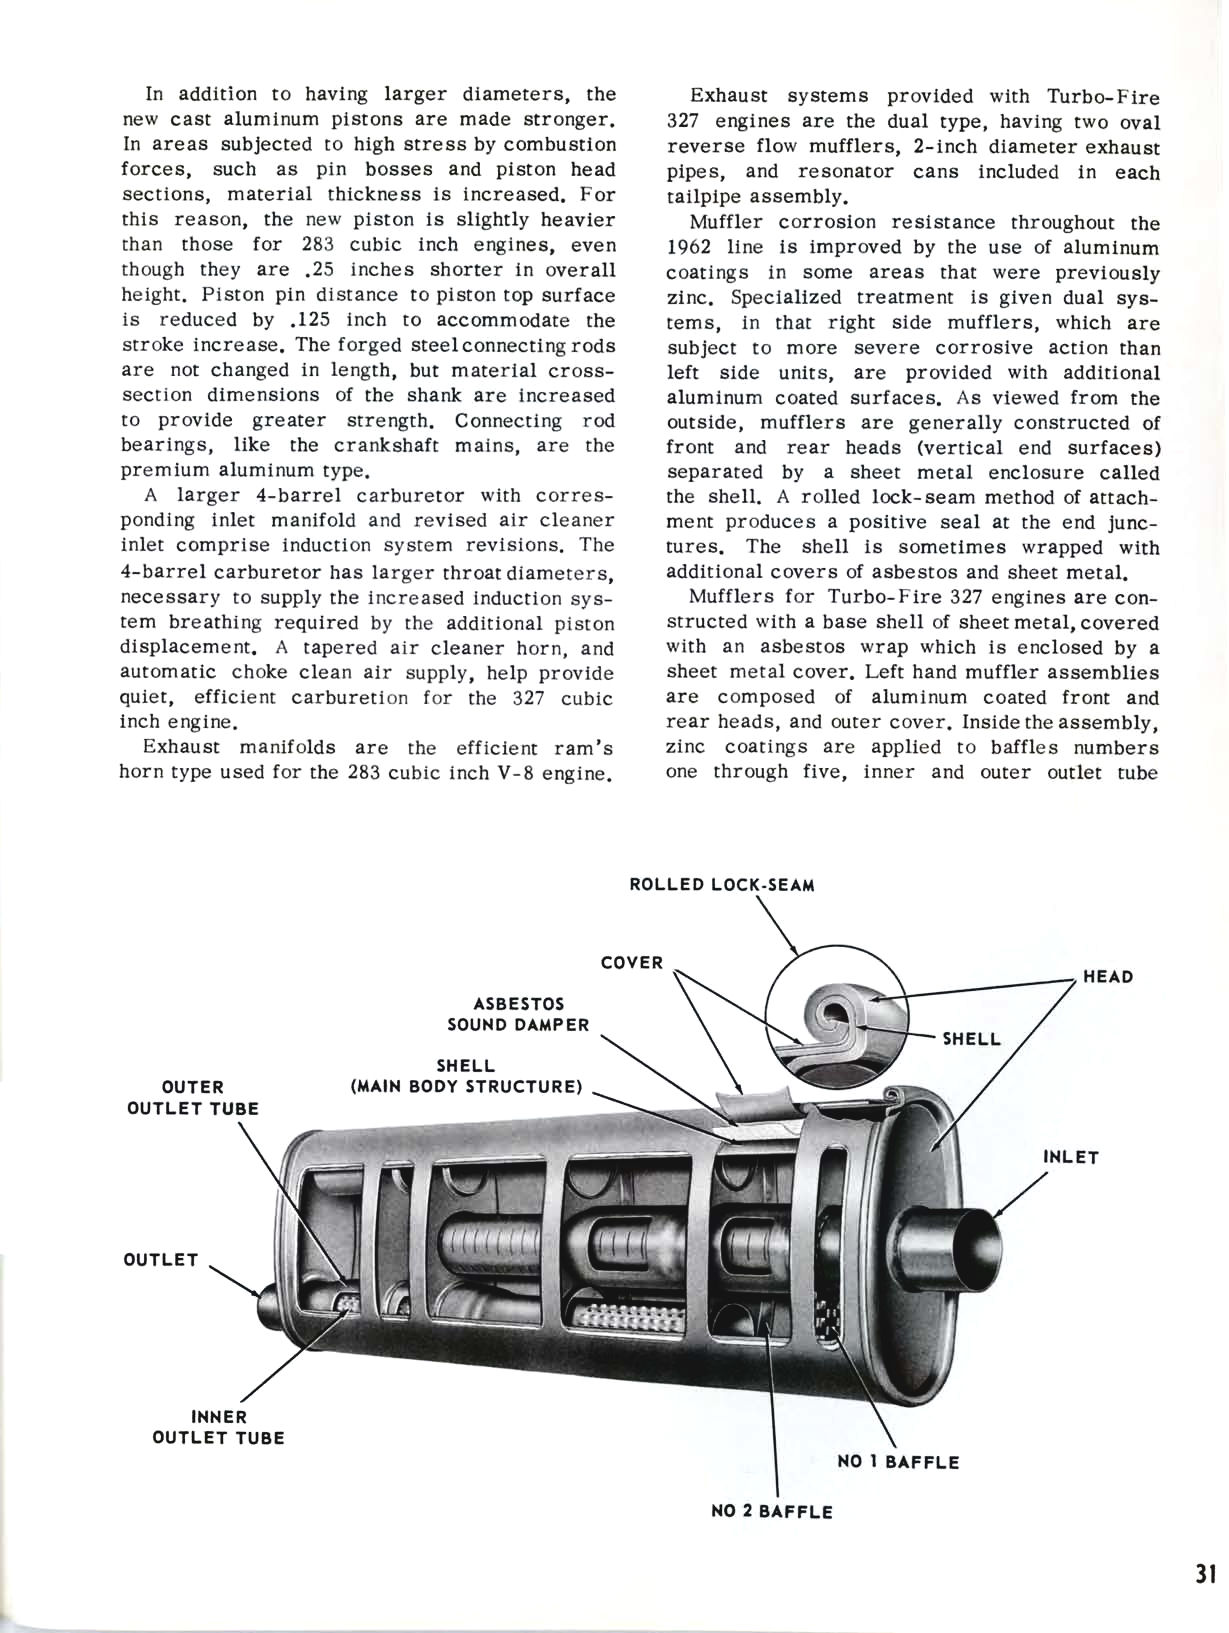 1962_Chevrolet_Engineering_Features-31